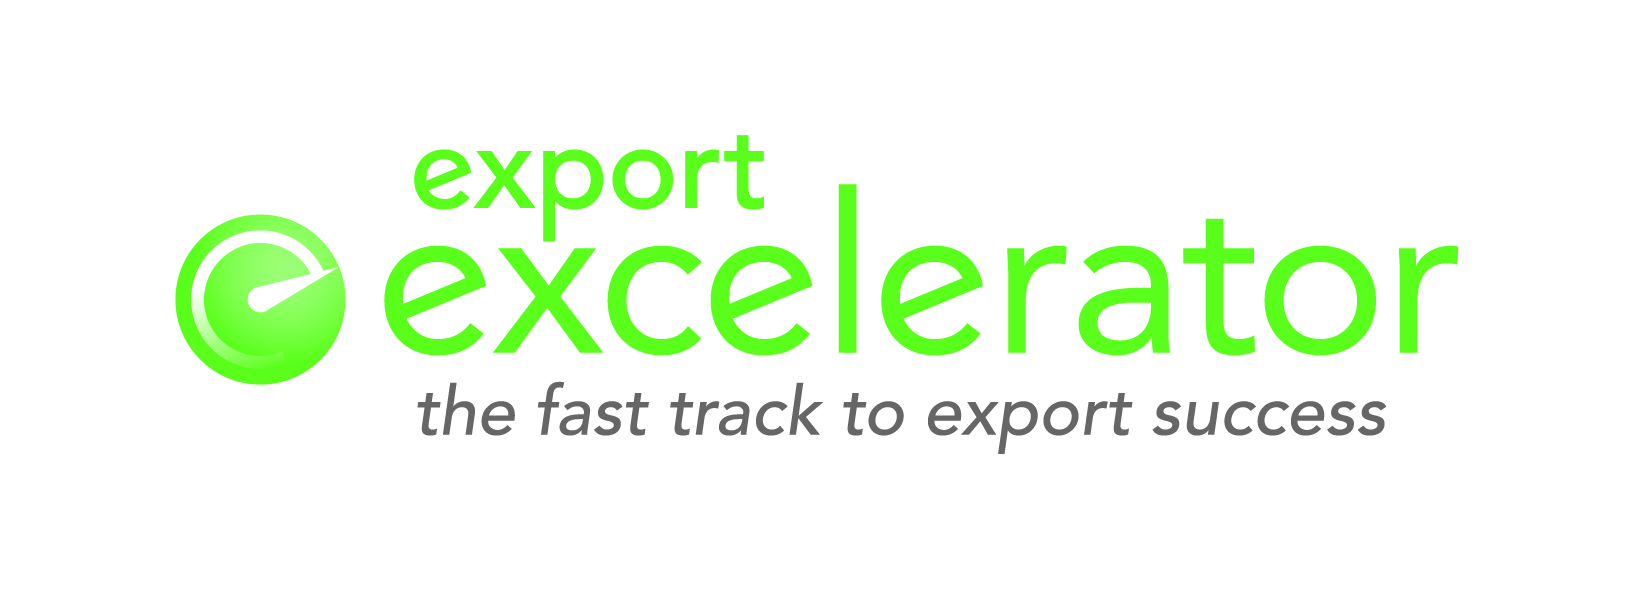 export excelerator logo